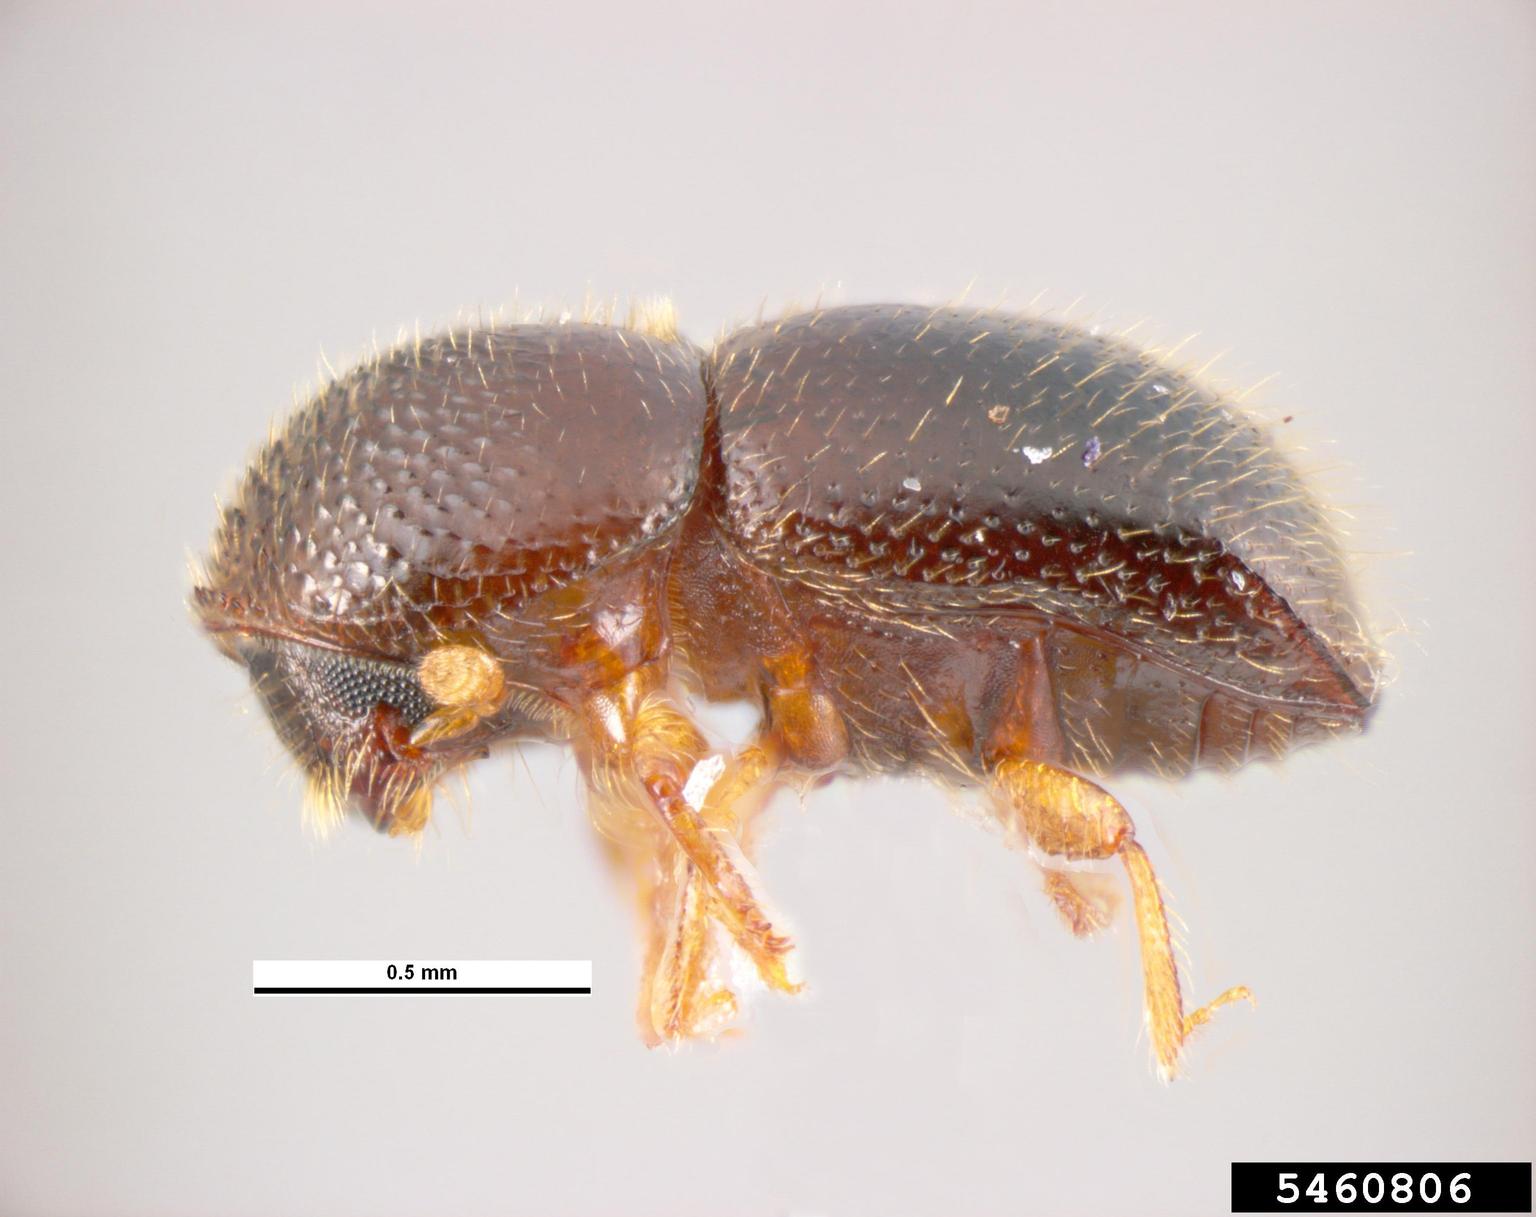 Xylosandrus compactus, a tree-boring beetle